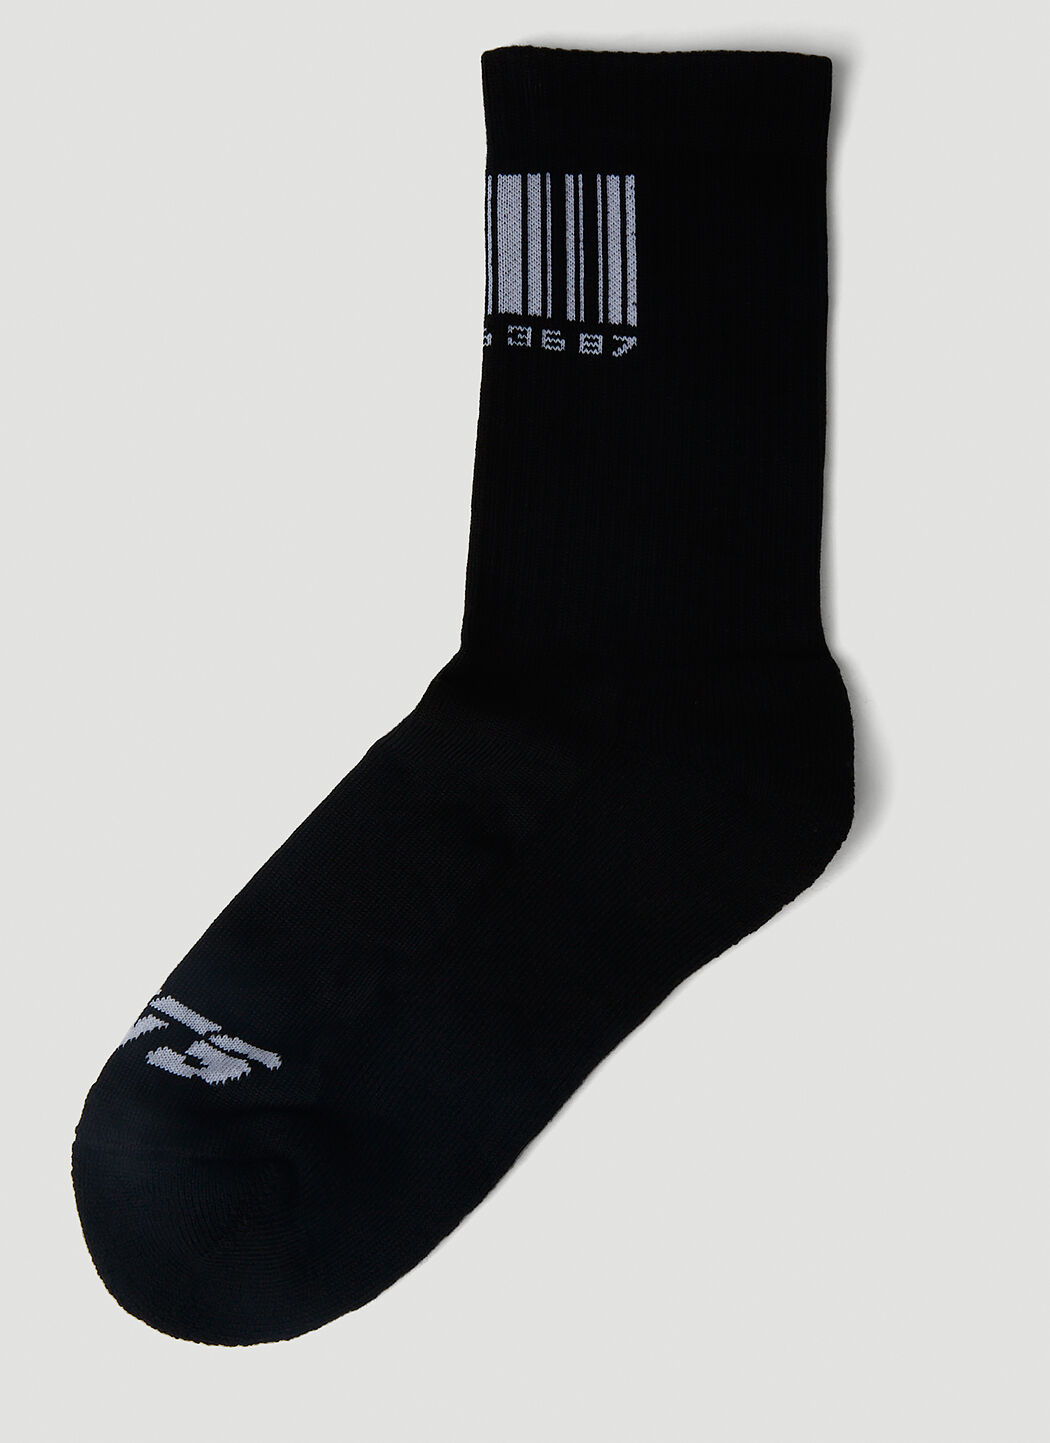 Kenzo Barcode Socks Black knz0154035